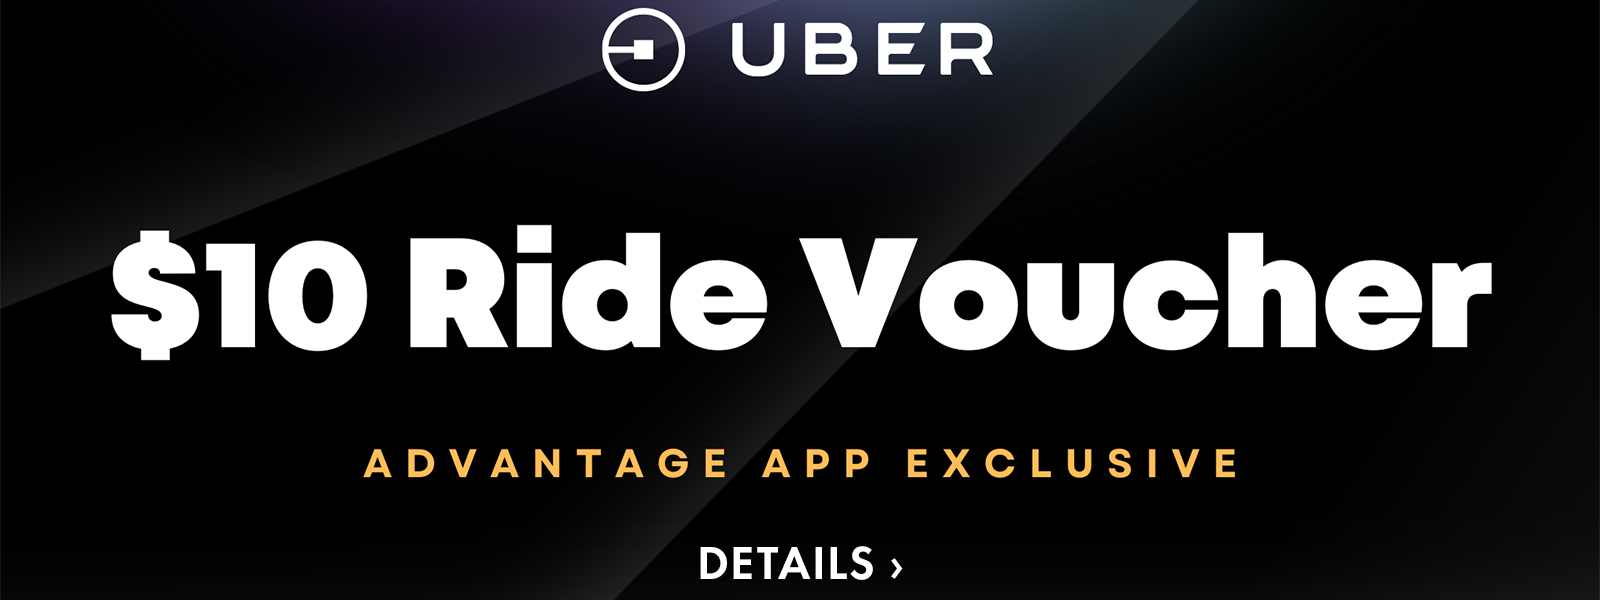 $10 Ride Voucher from Uber